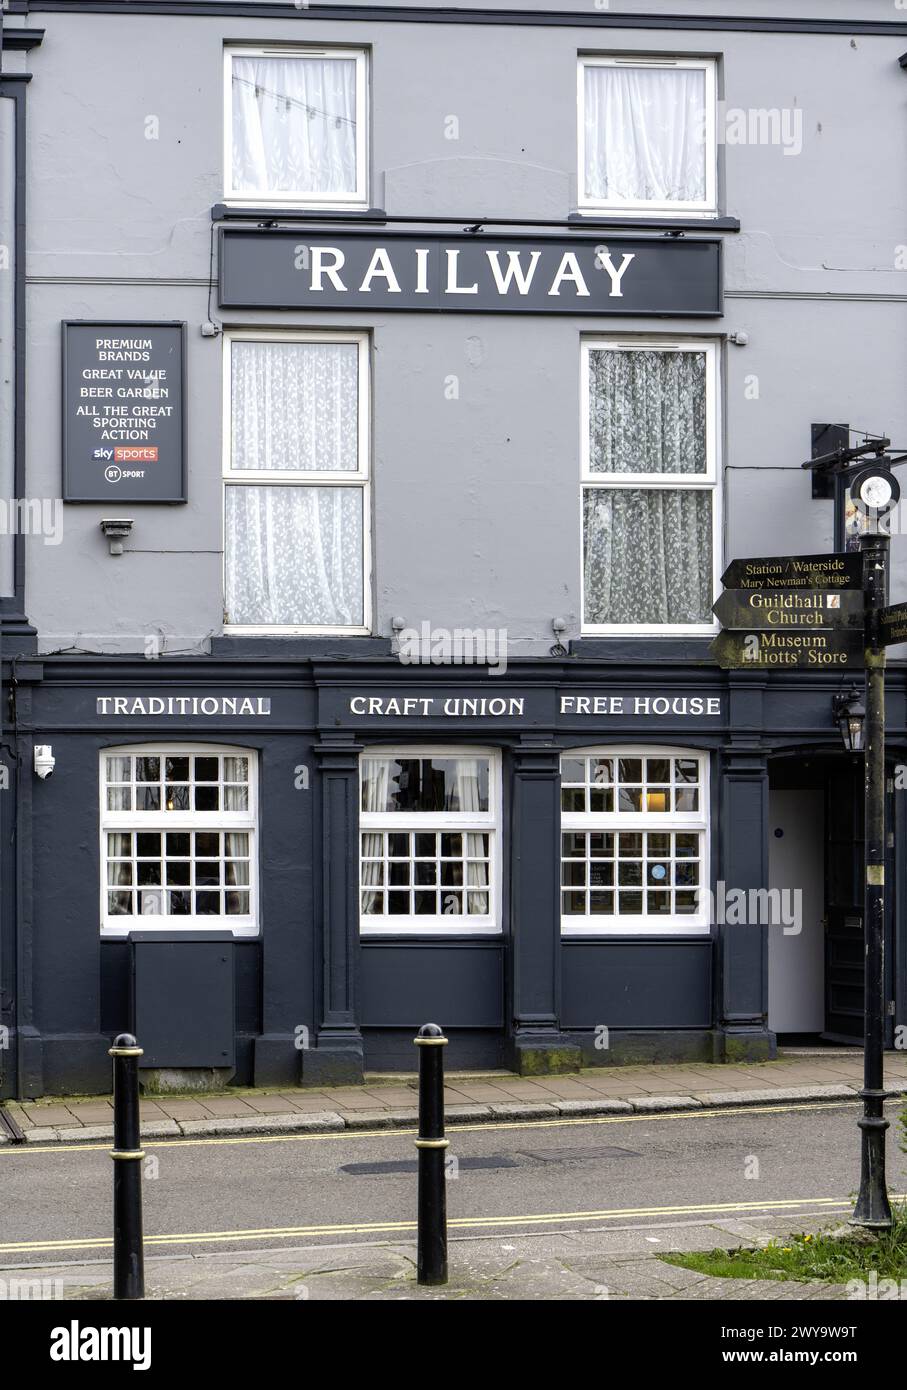 The Railway Hotel - a Craft Union public house - Fore Street, Saltash, Cornwall, England, UK Stock Photo